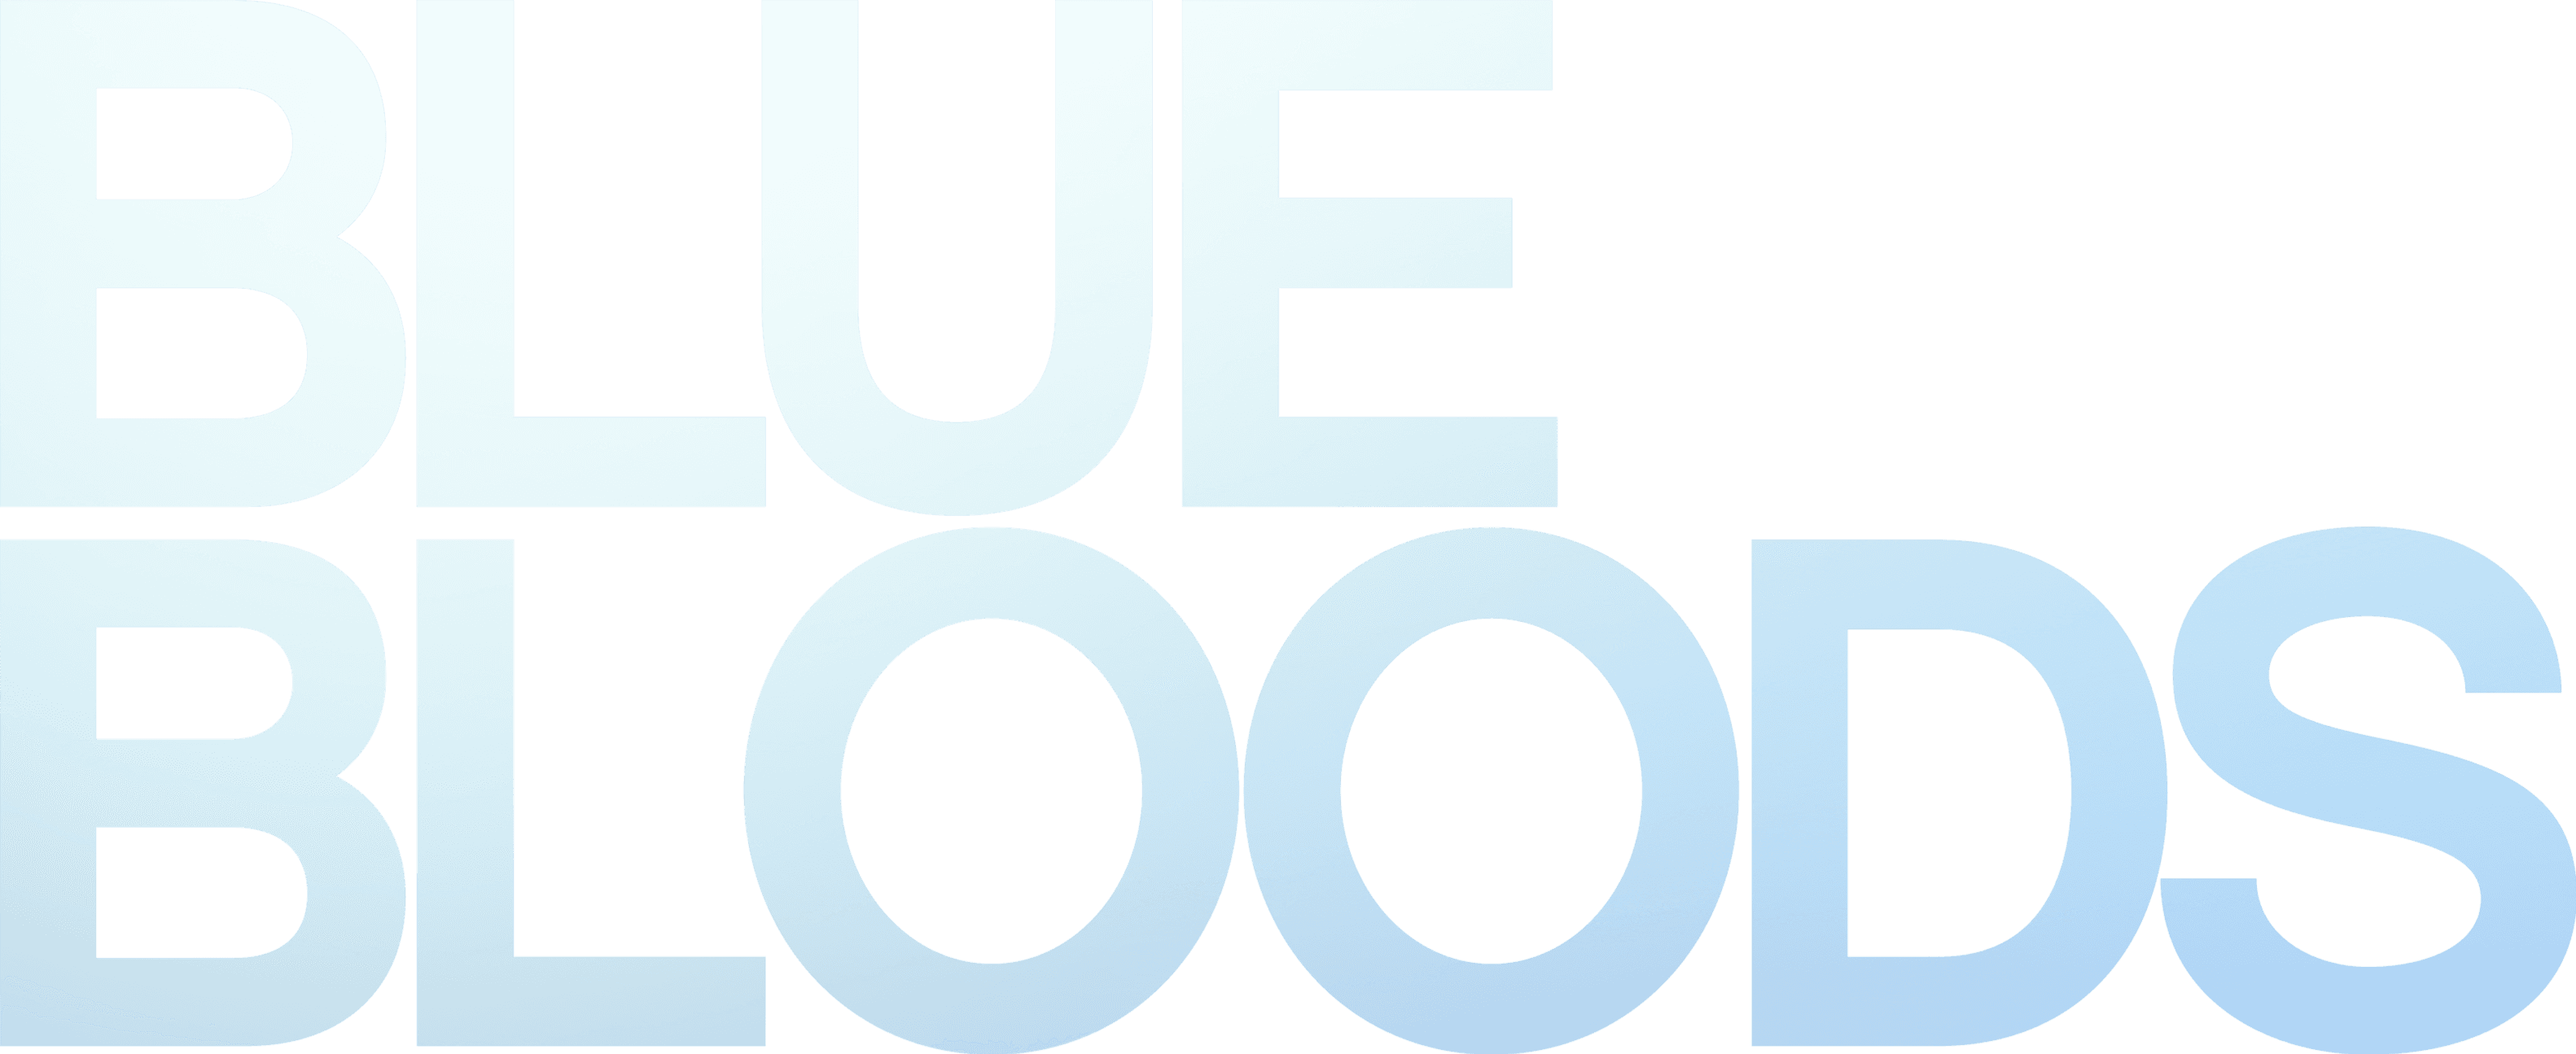 Blue Bloods logo